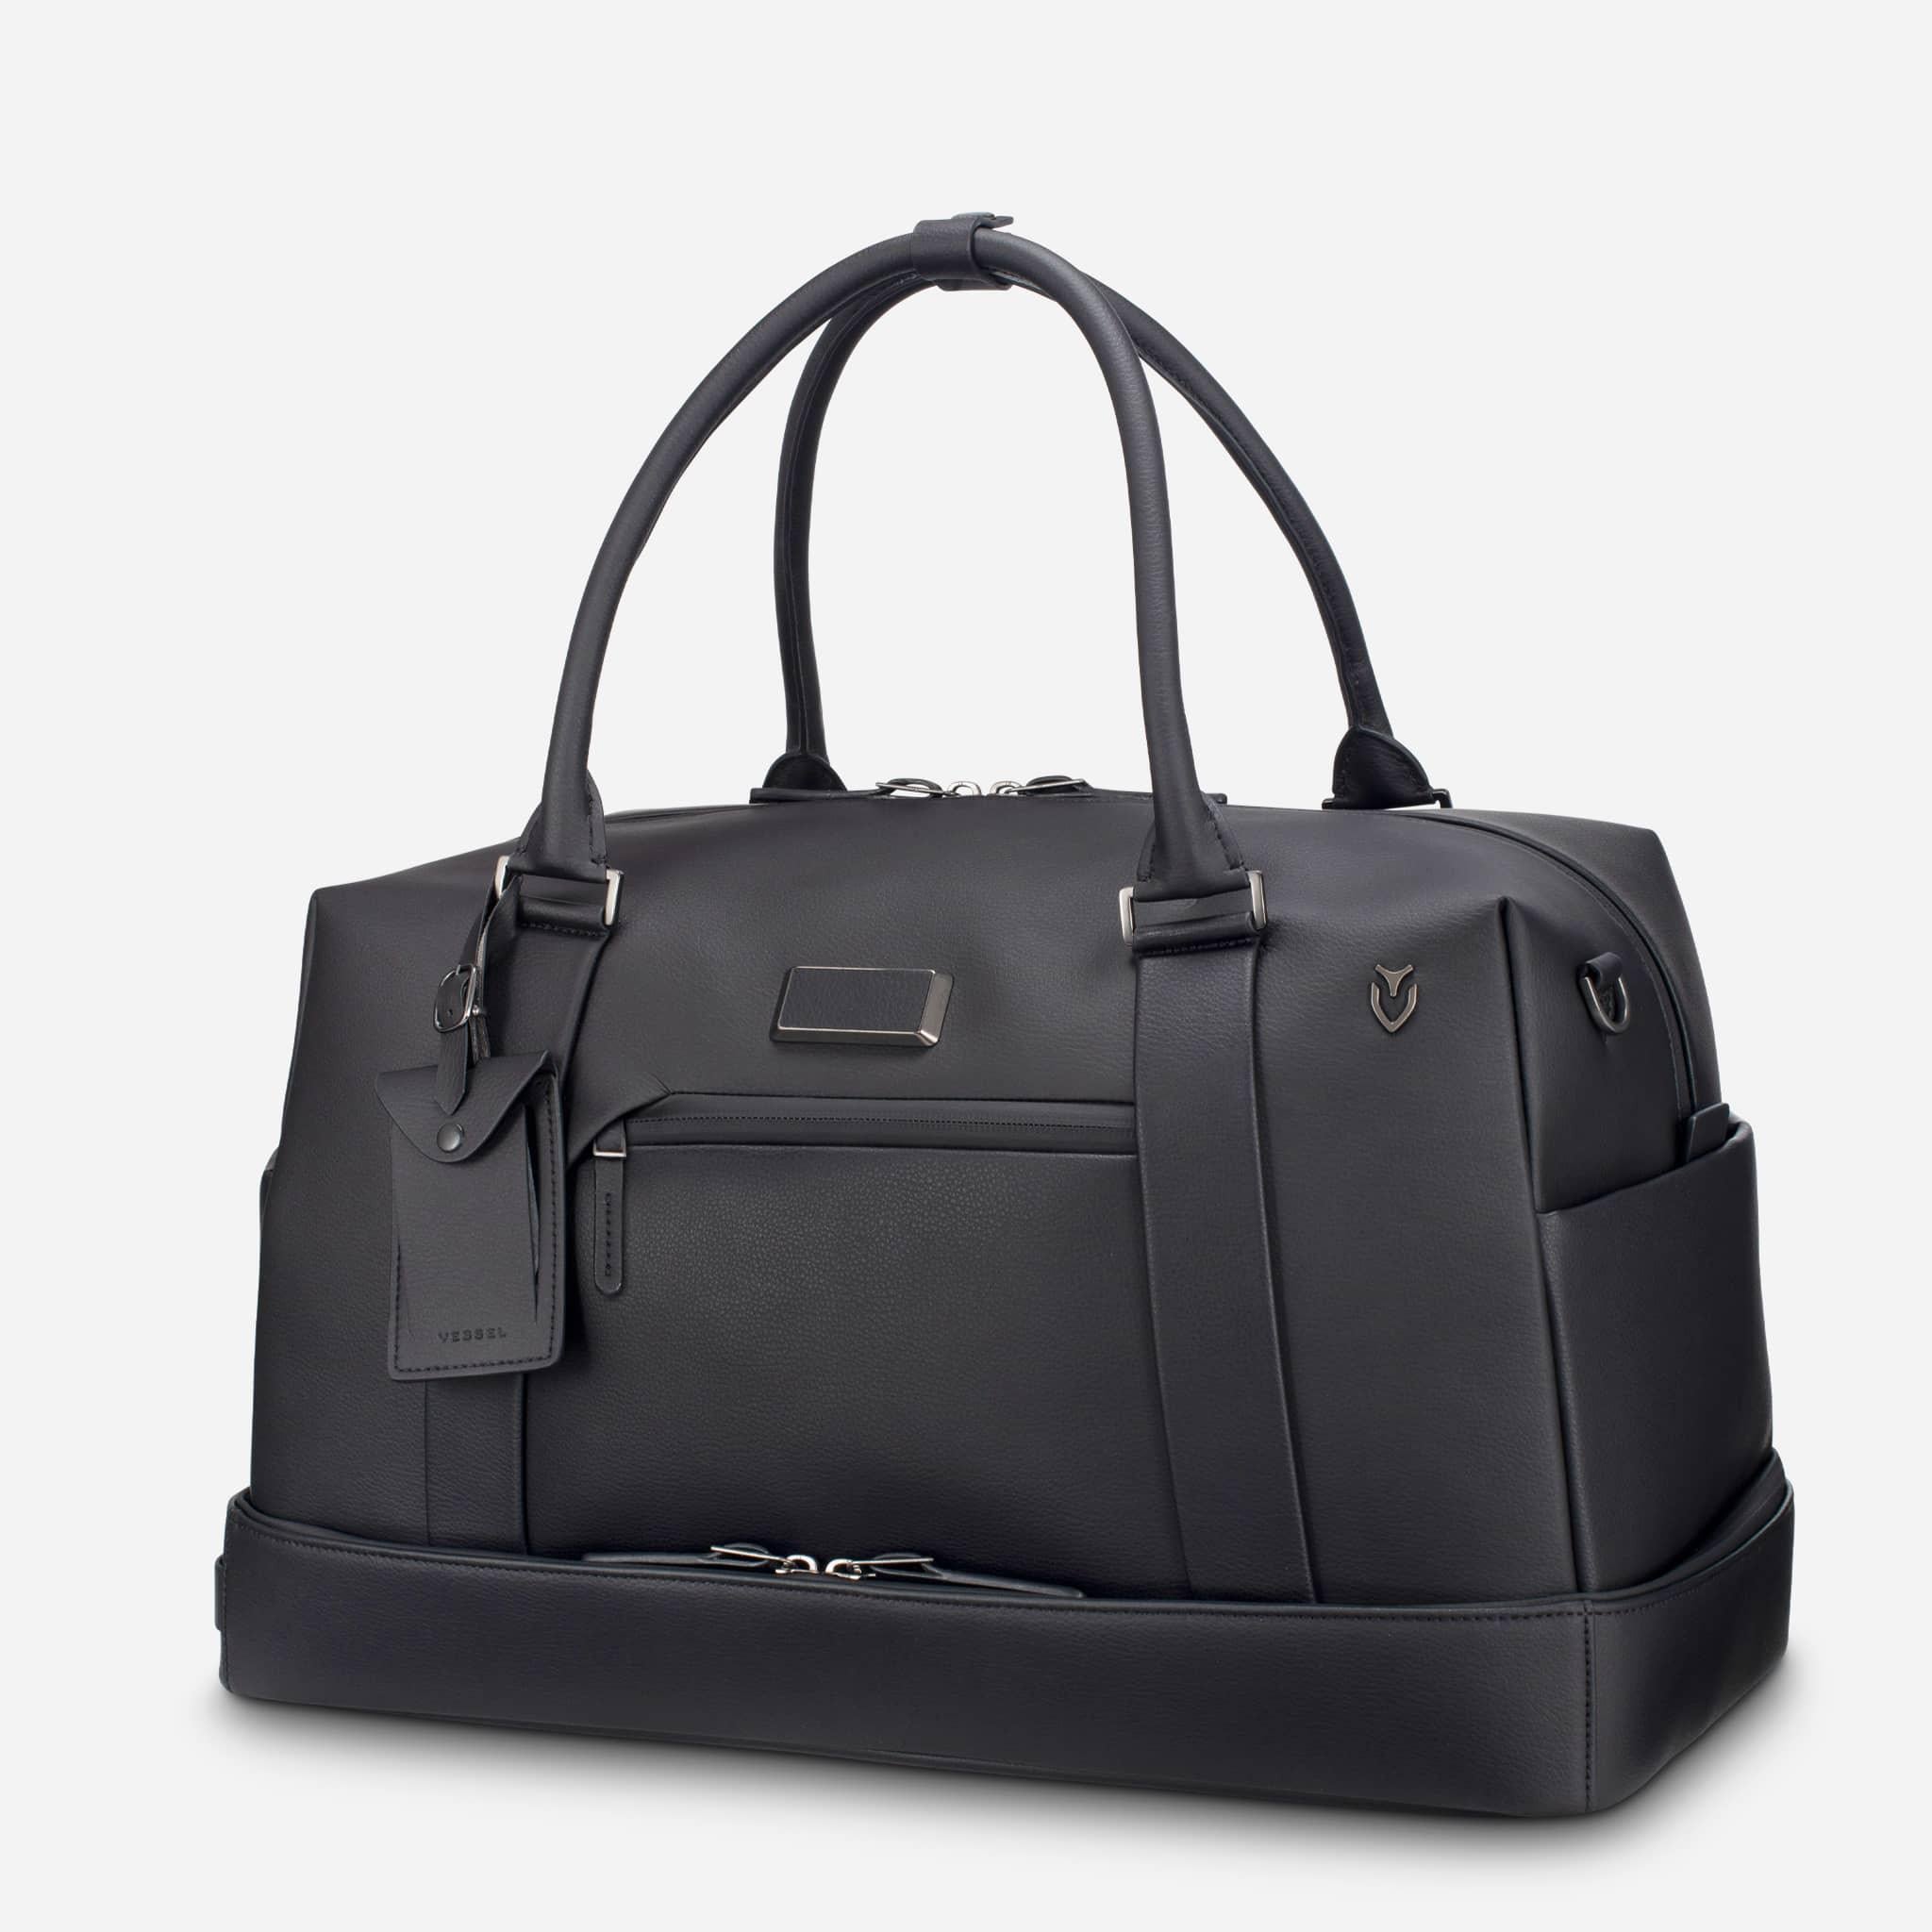 Boston leather handbag